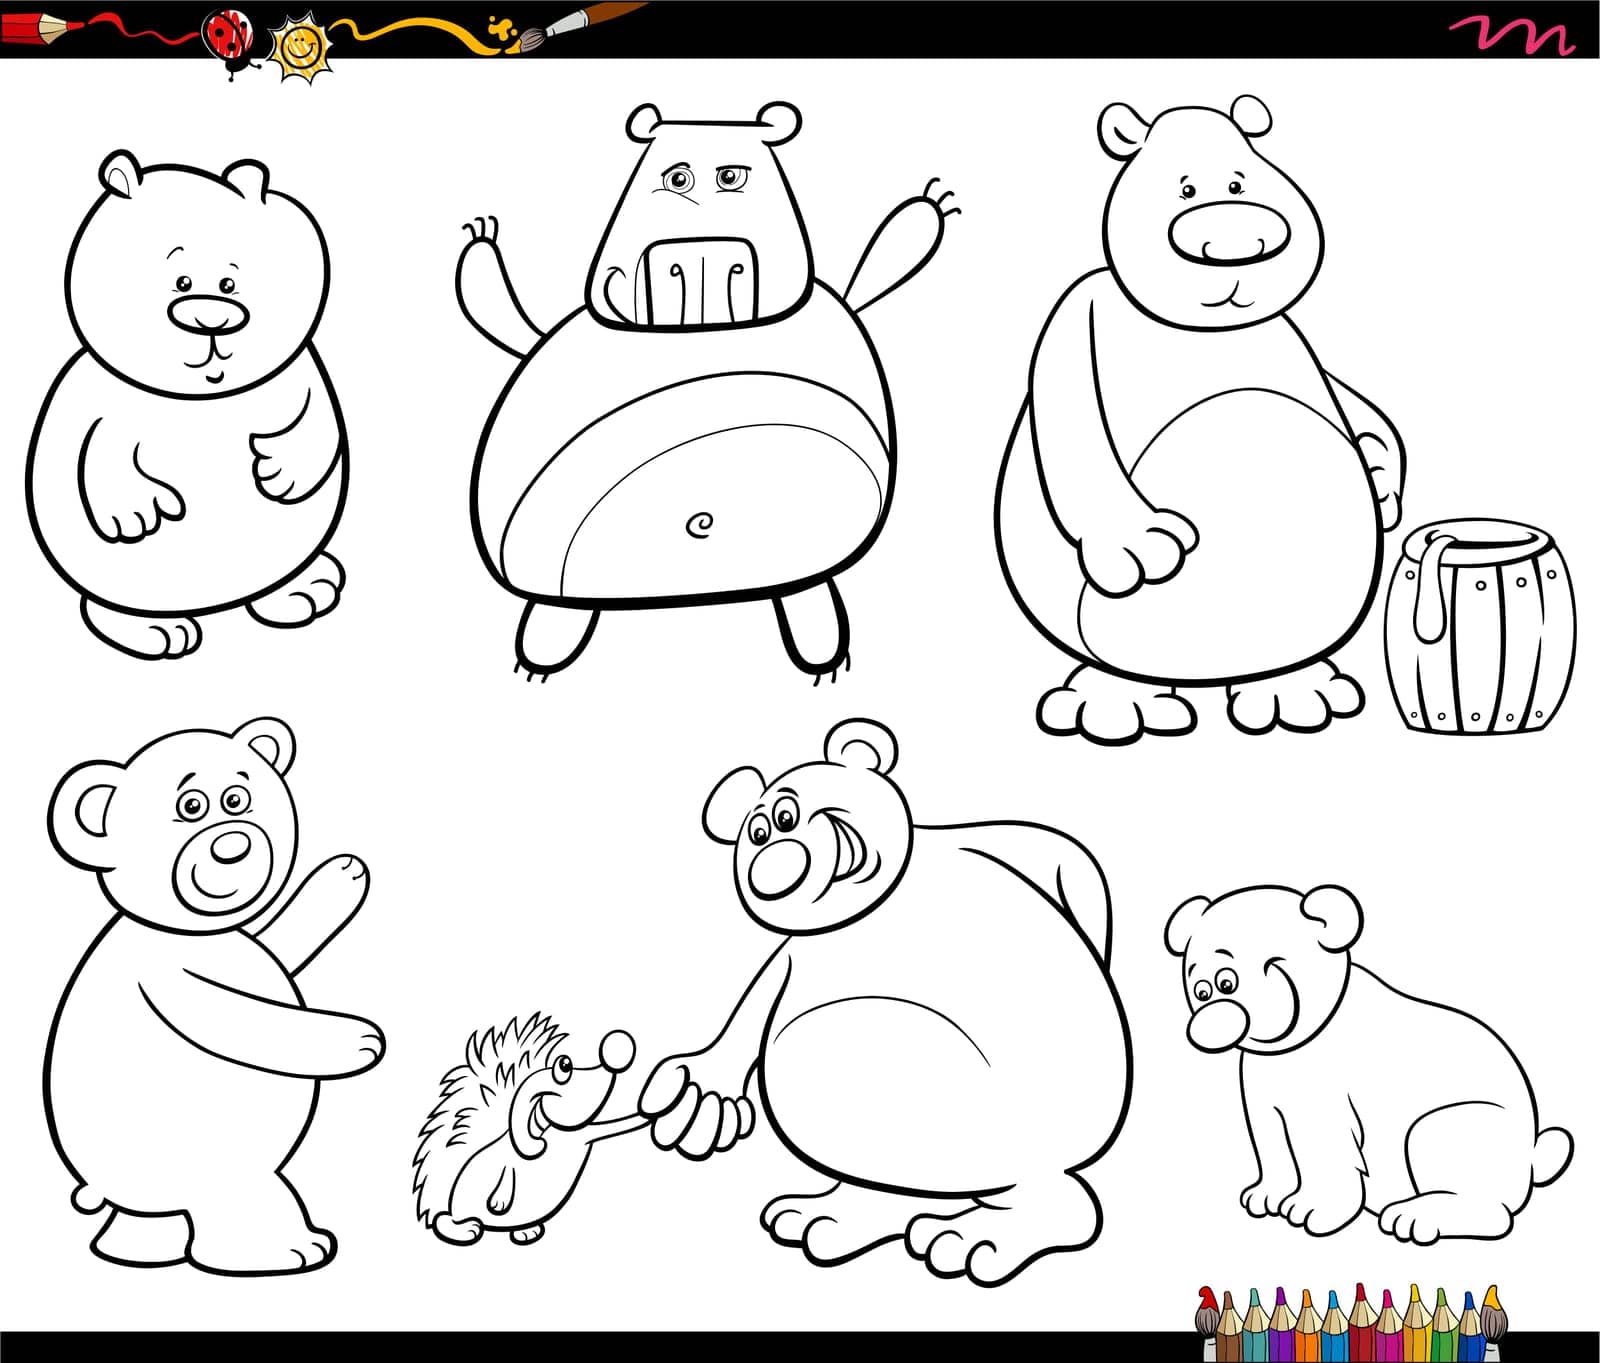 funny cartoon bears animal characters set coloring page by izakowski